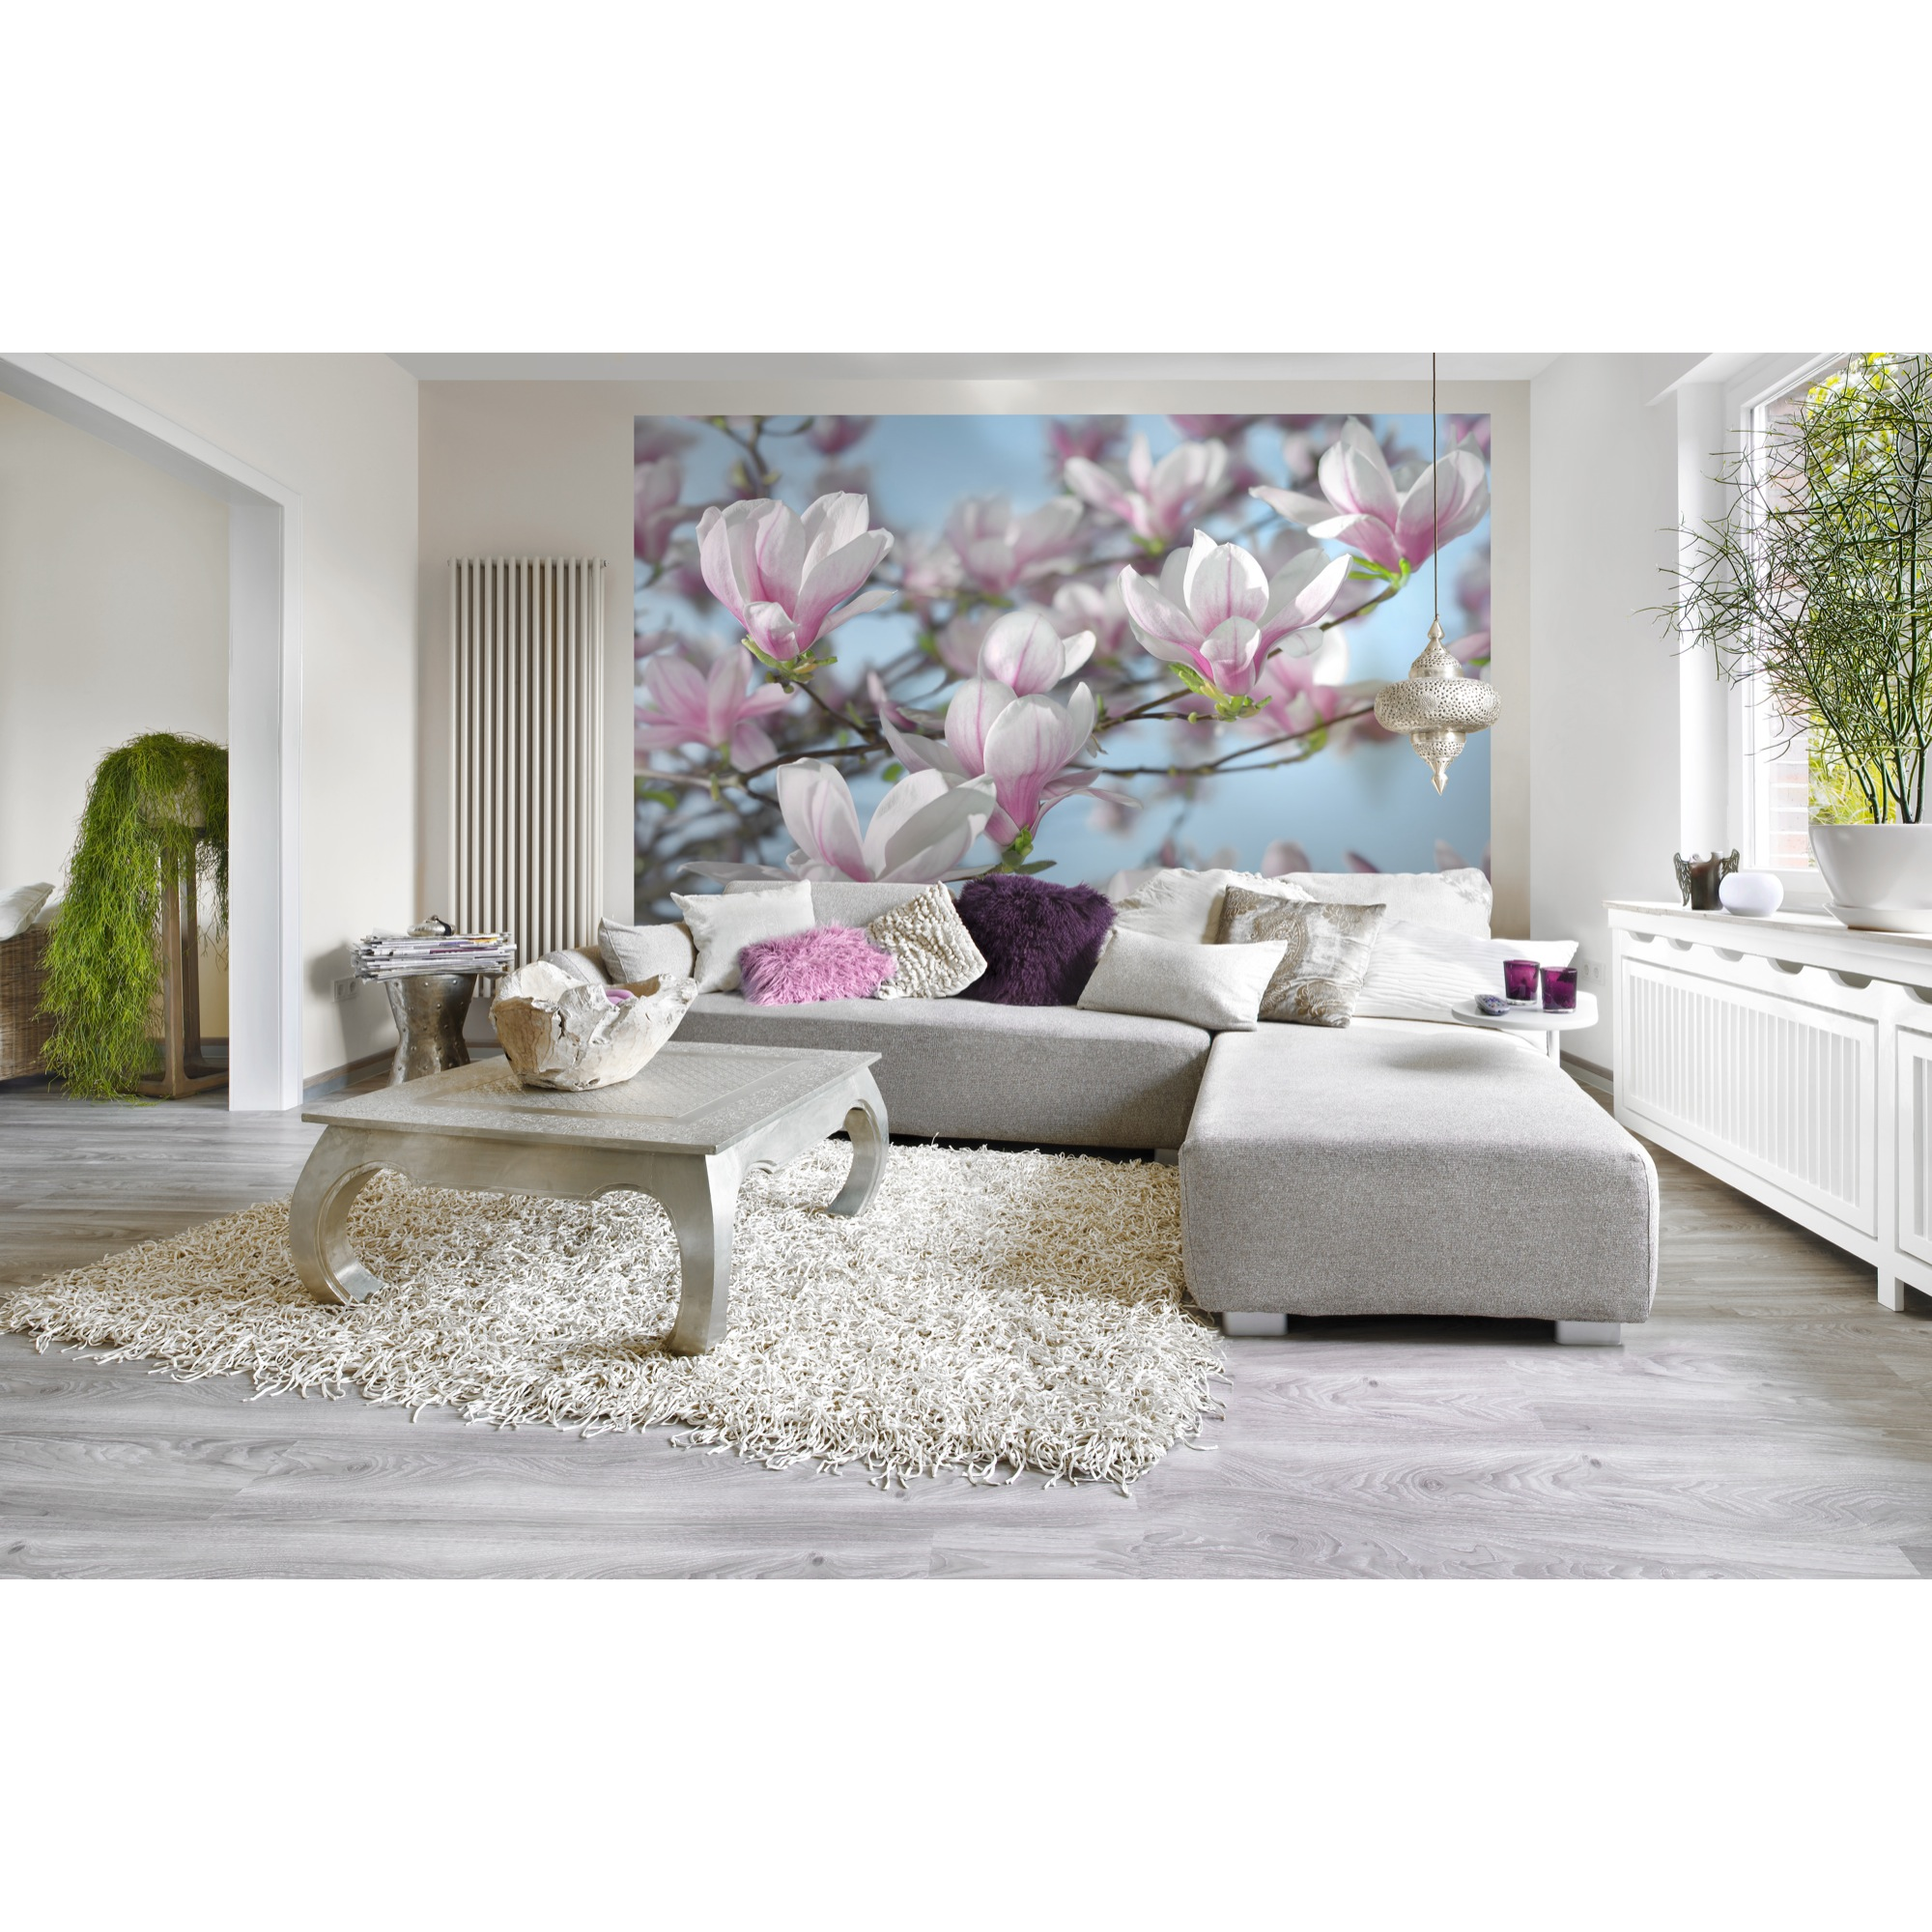 Fototapete 'Magnolia' 368 x 254 cm + product picture